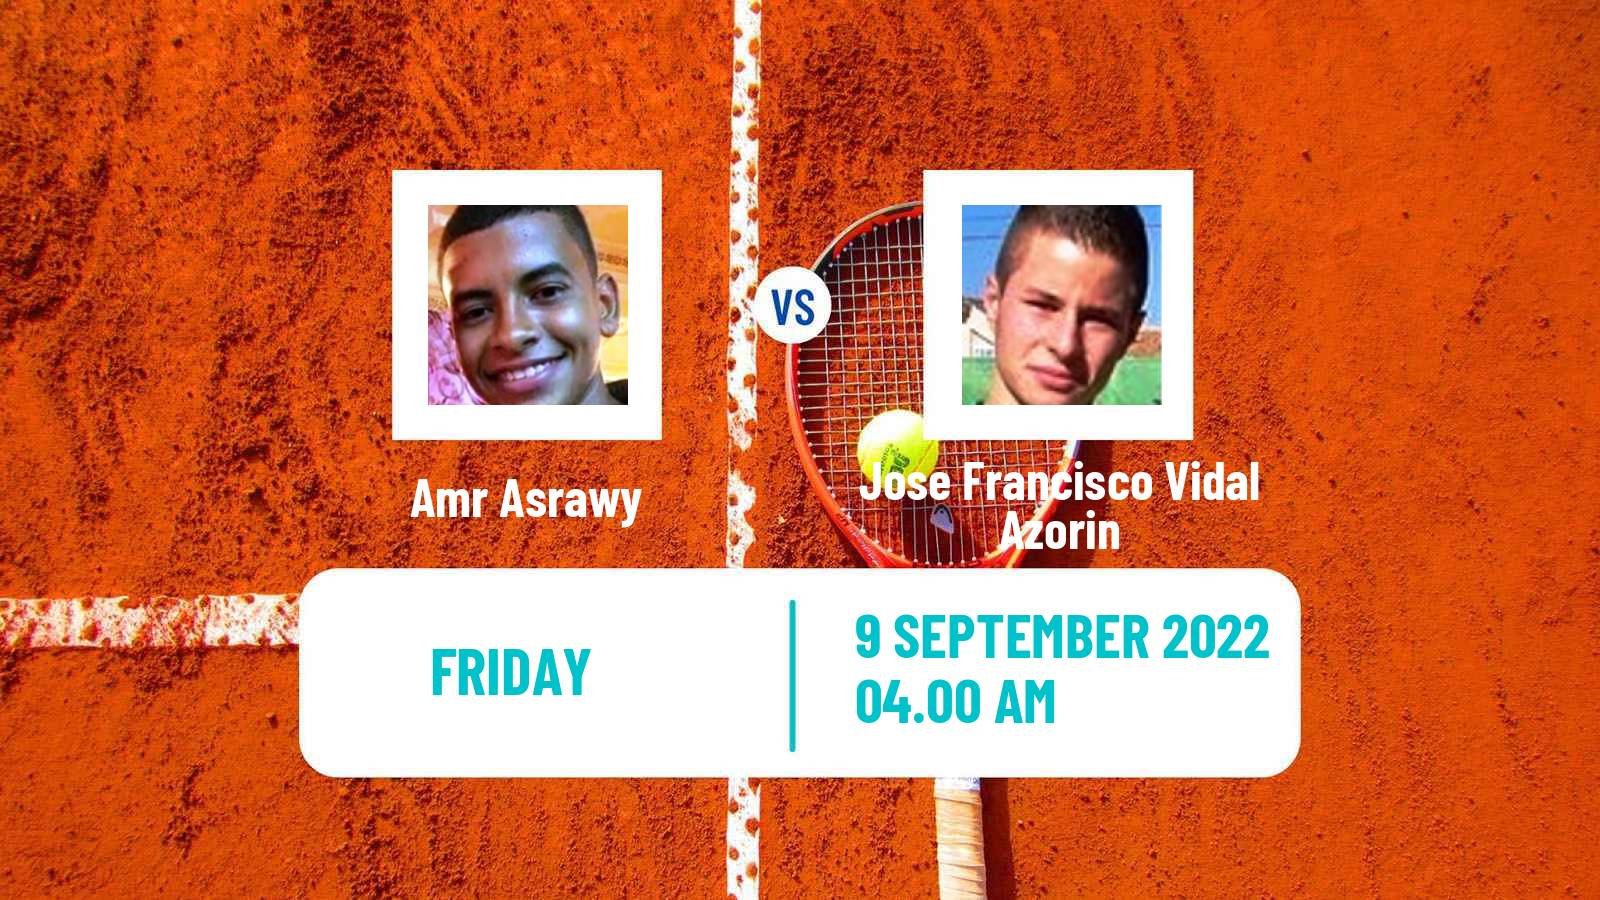 Tennis ITF Tournaments Amr Asrawy - Jose Francisco Vidal Azorin